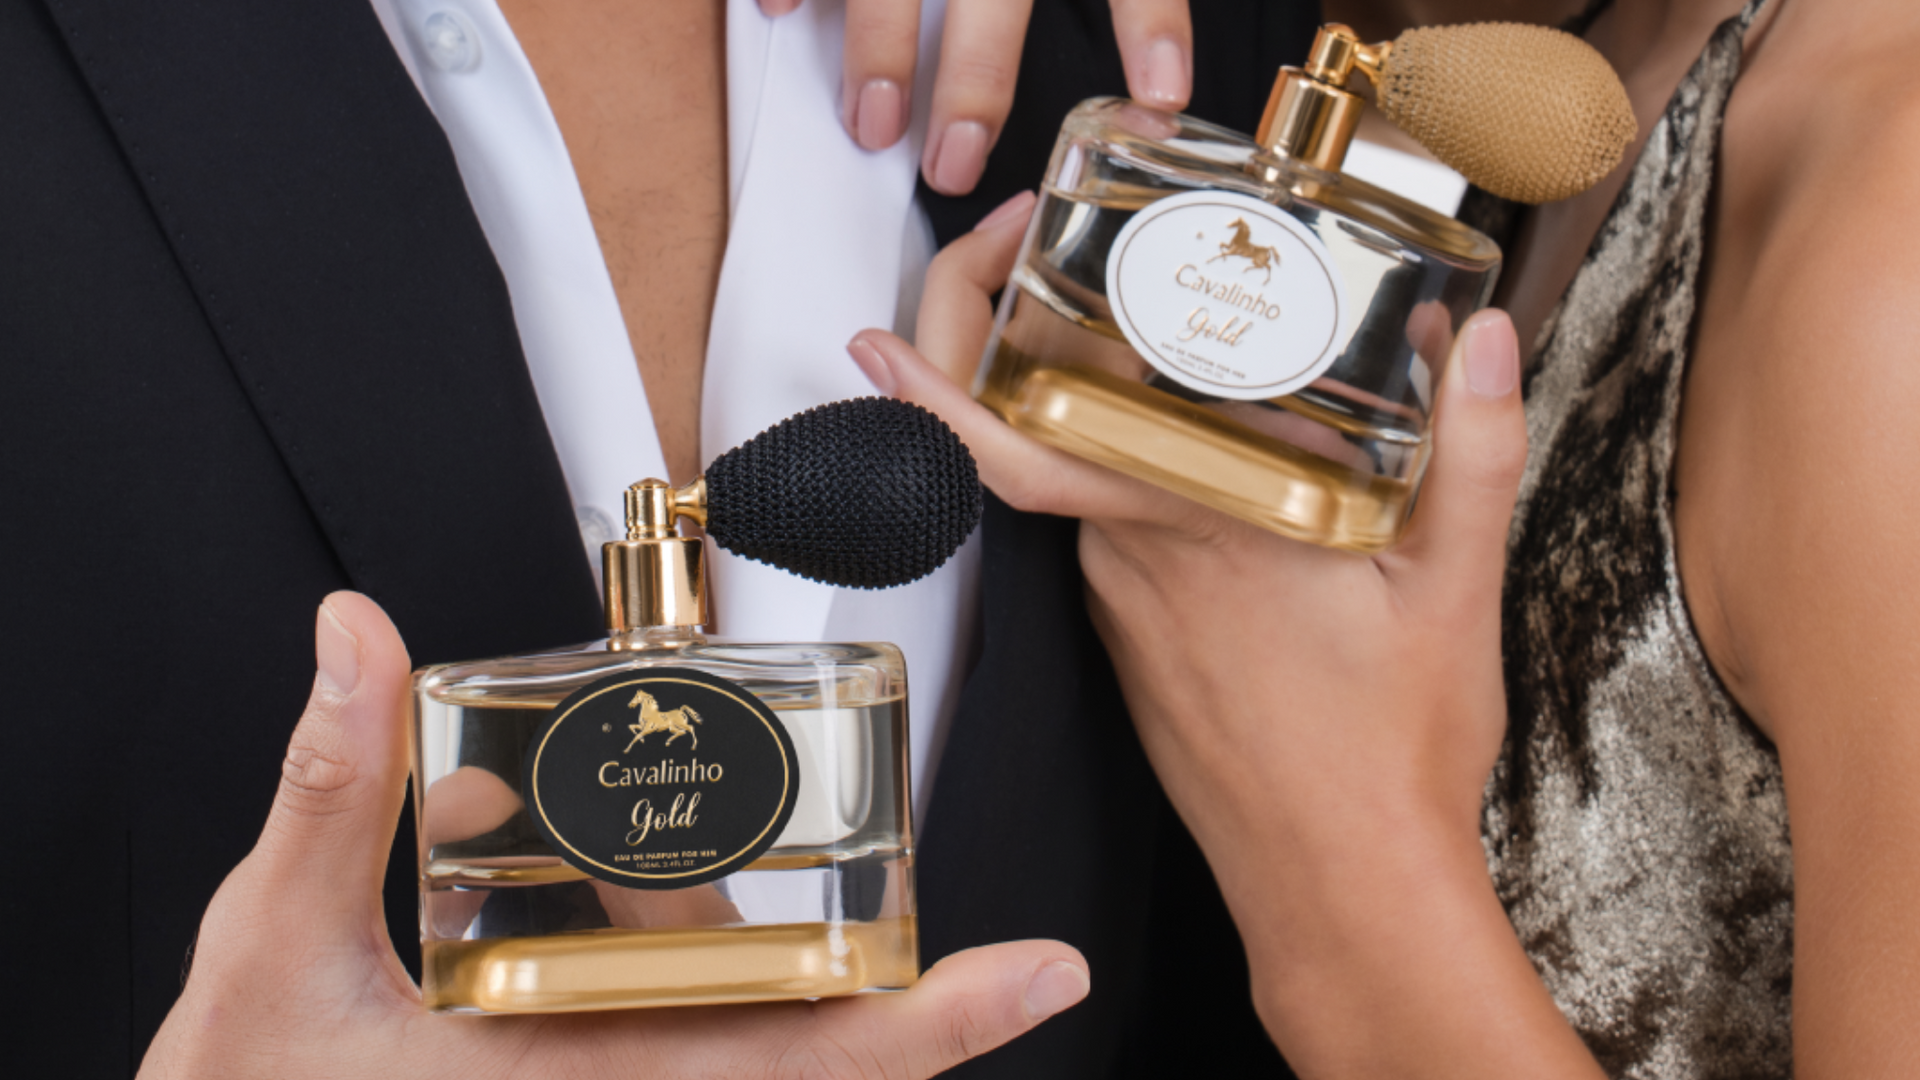 Load video: Cavalinho Gold Perfume Fragrance